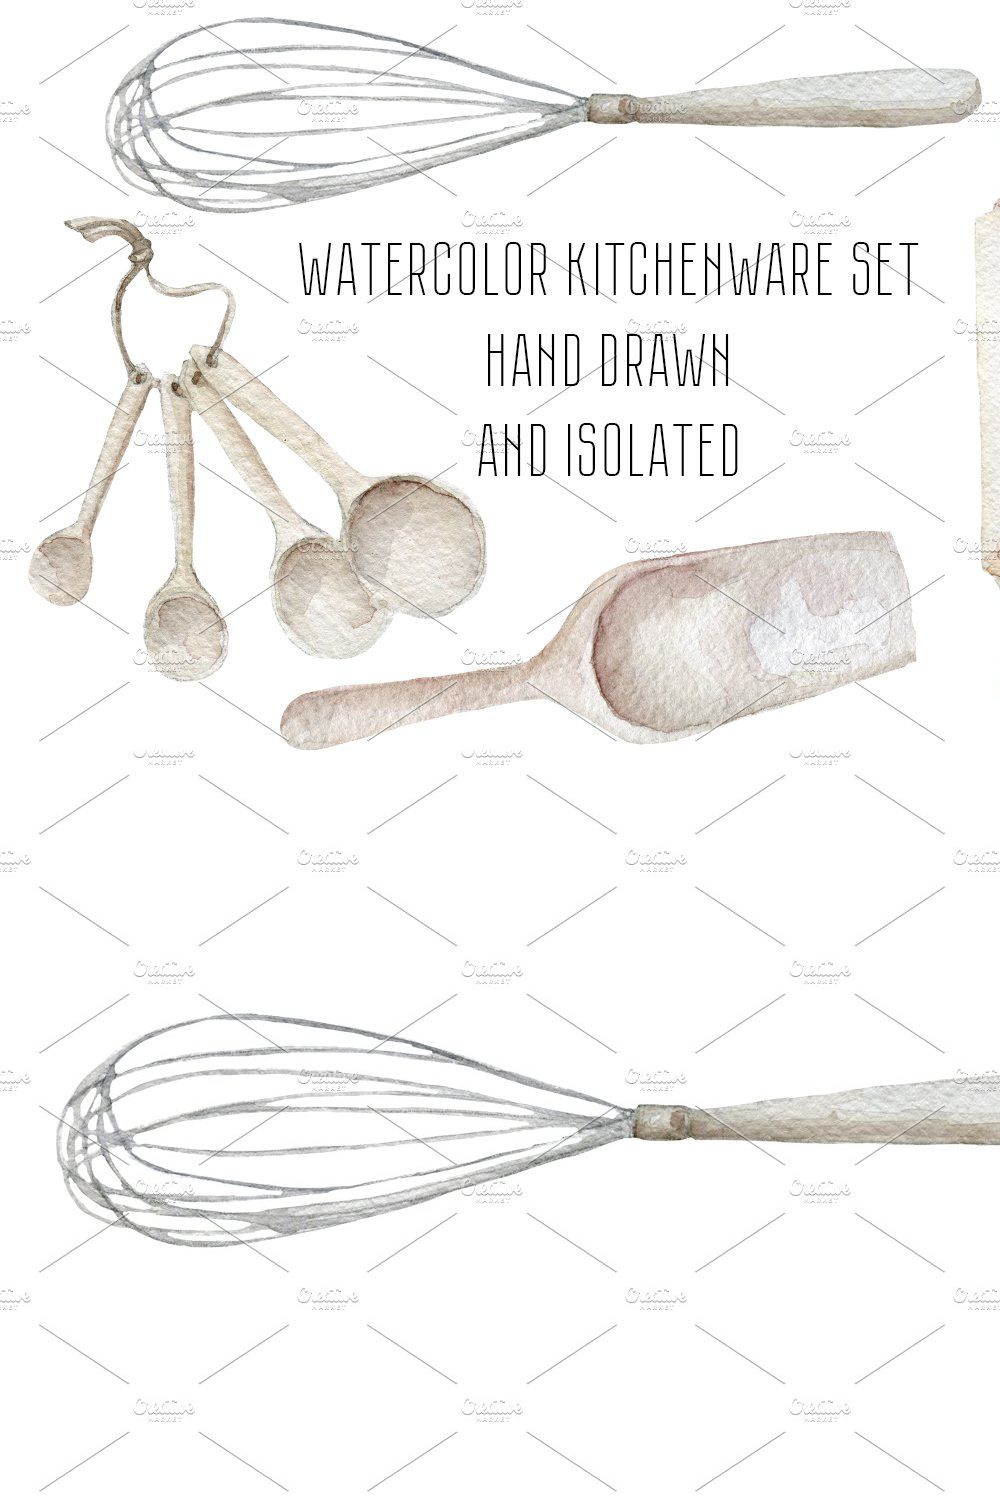 Watercolor kitchenware set pinterest preview image.